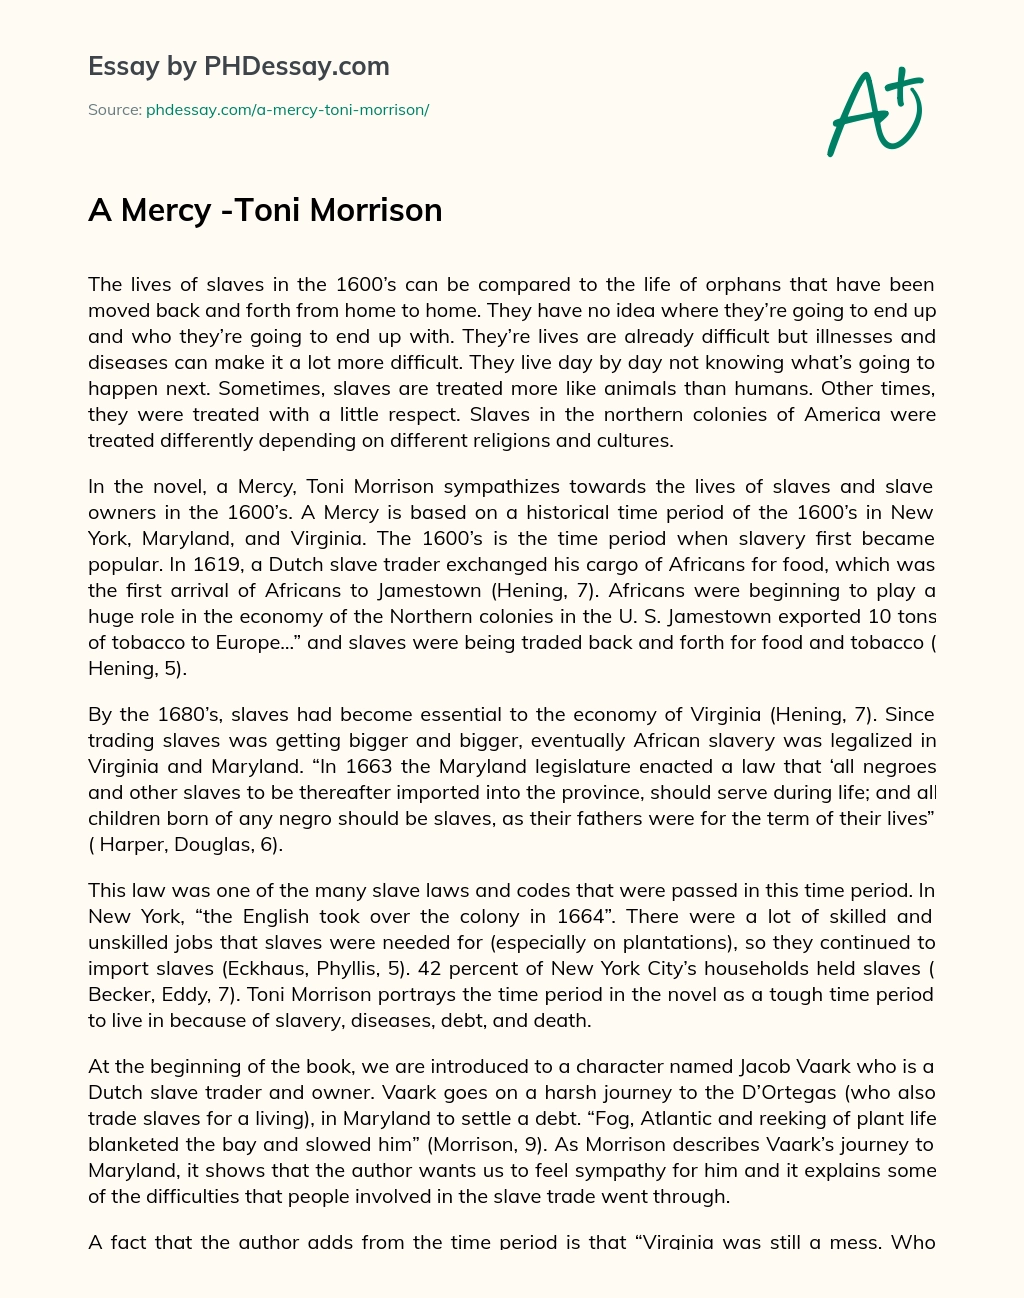 A Mercy -Toni Morrison essay